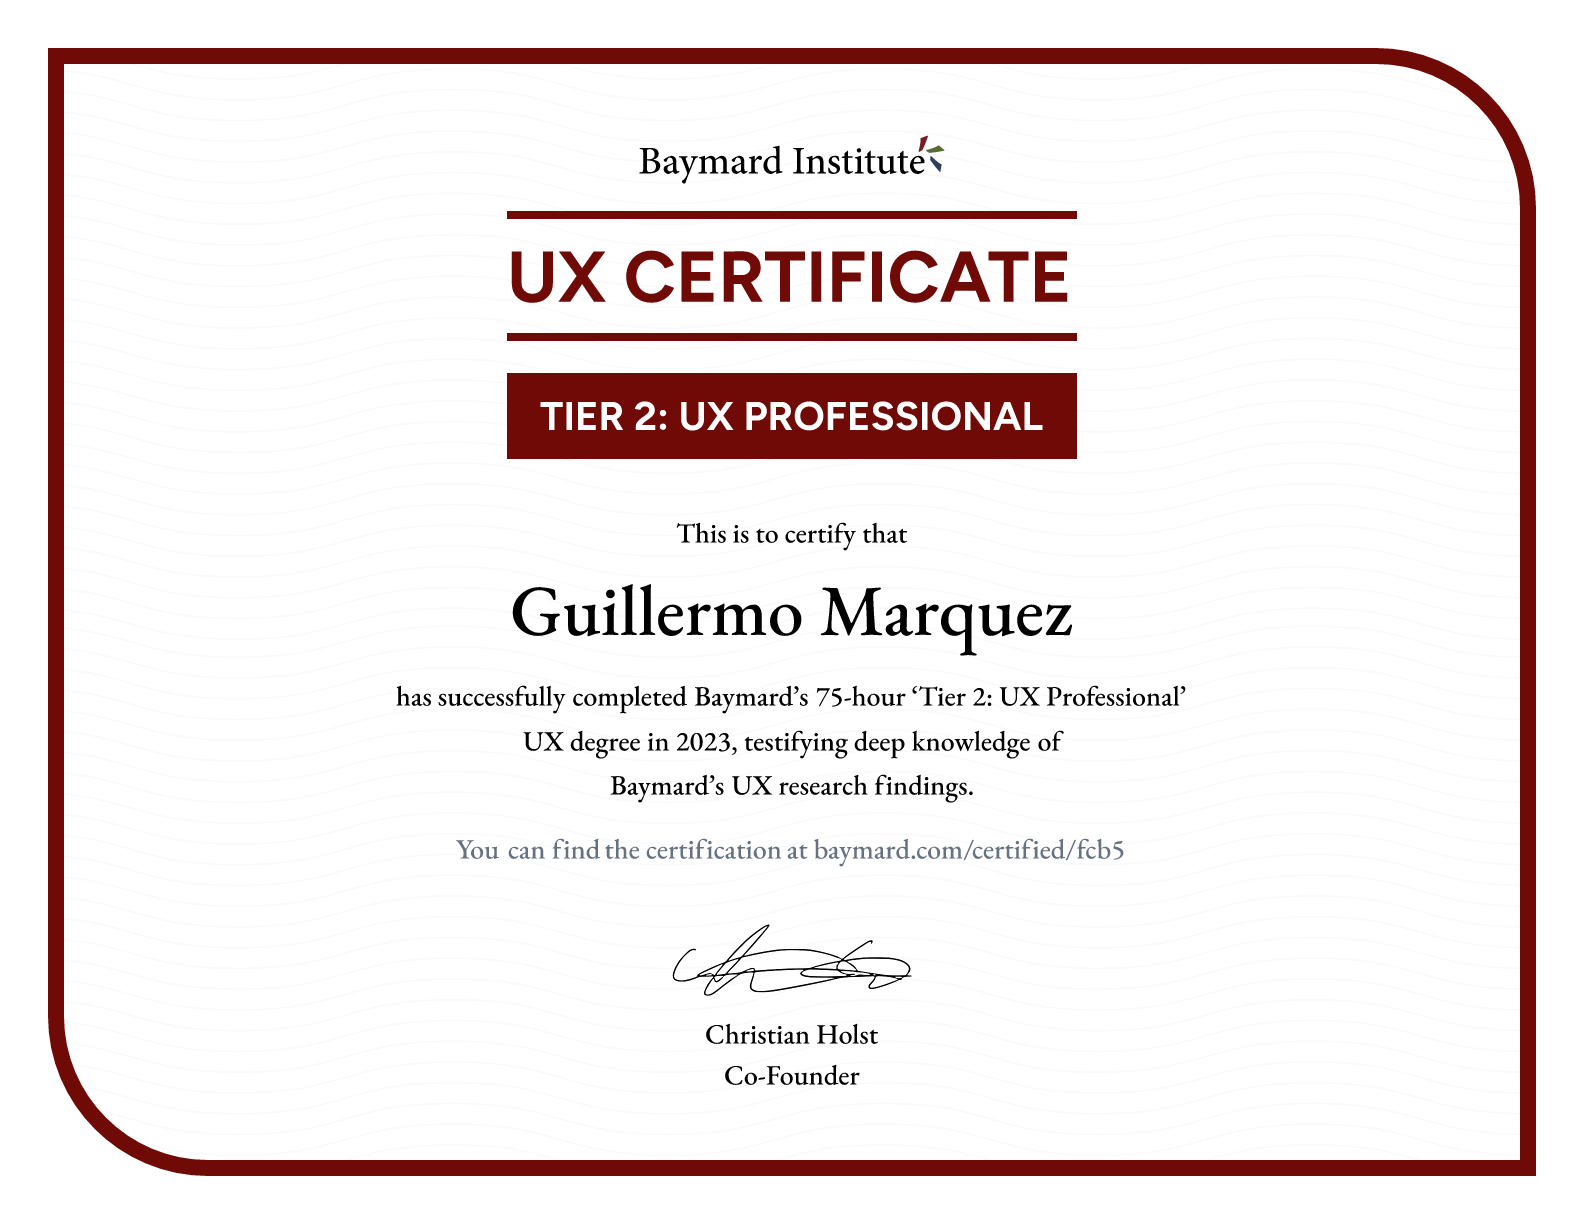 Guillermo Marquez’s certificate